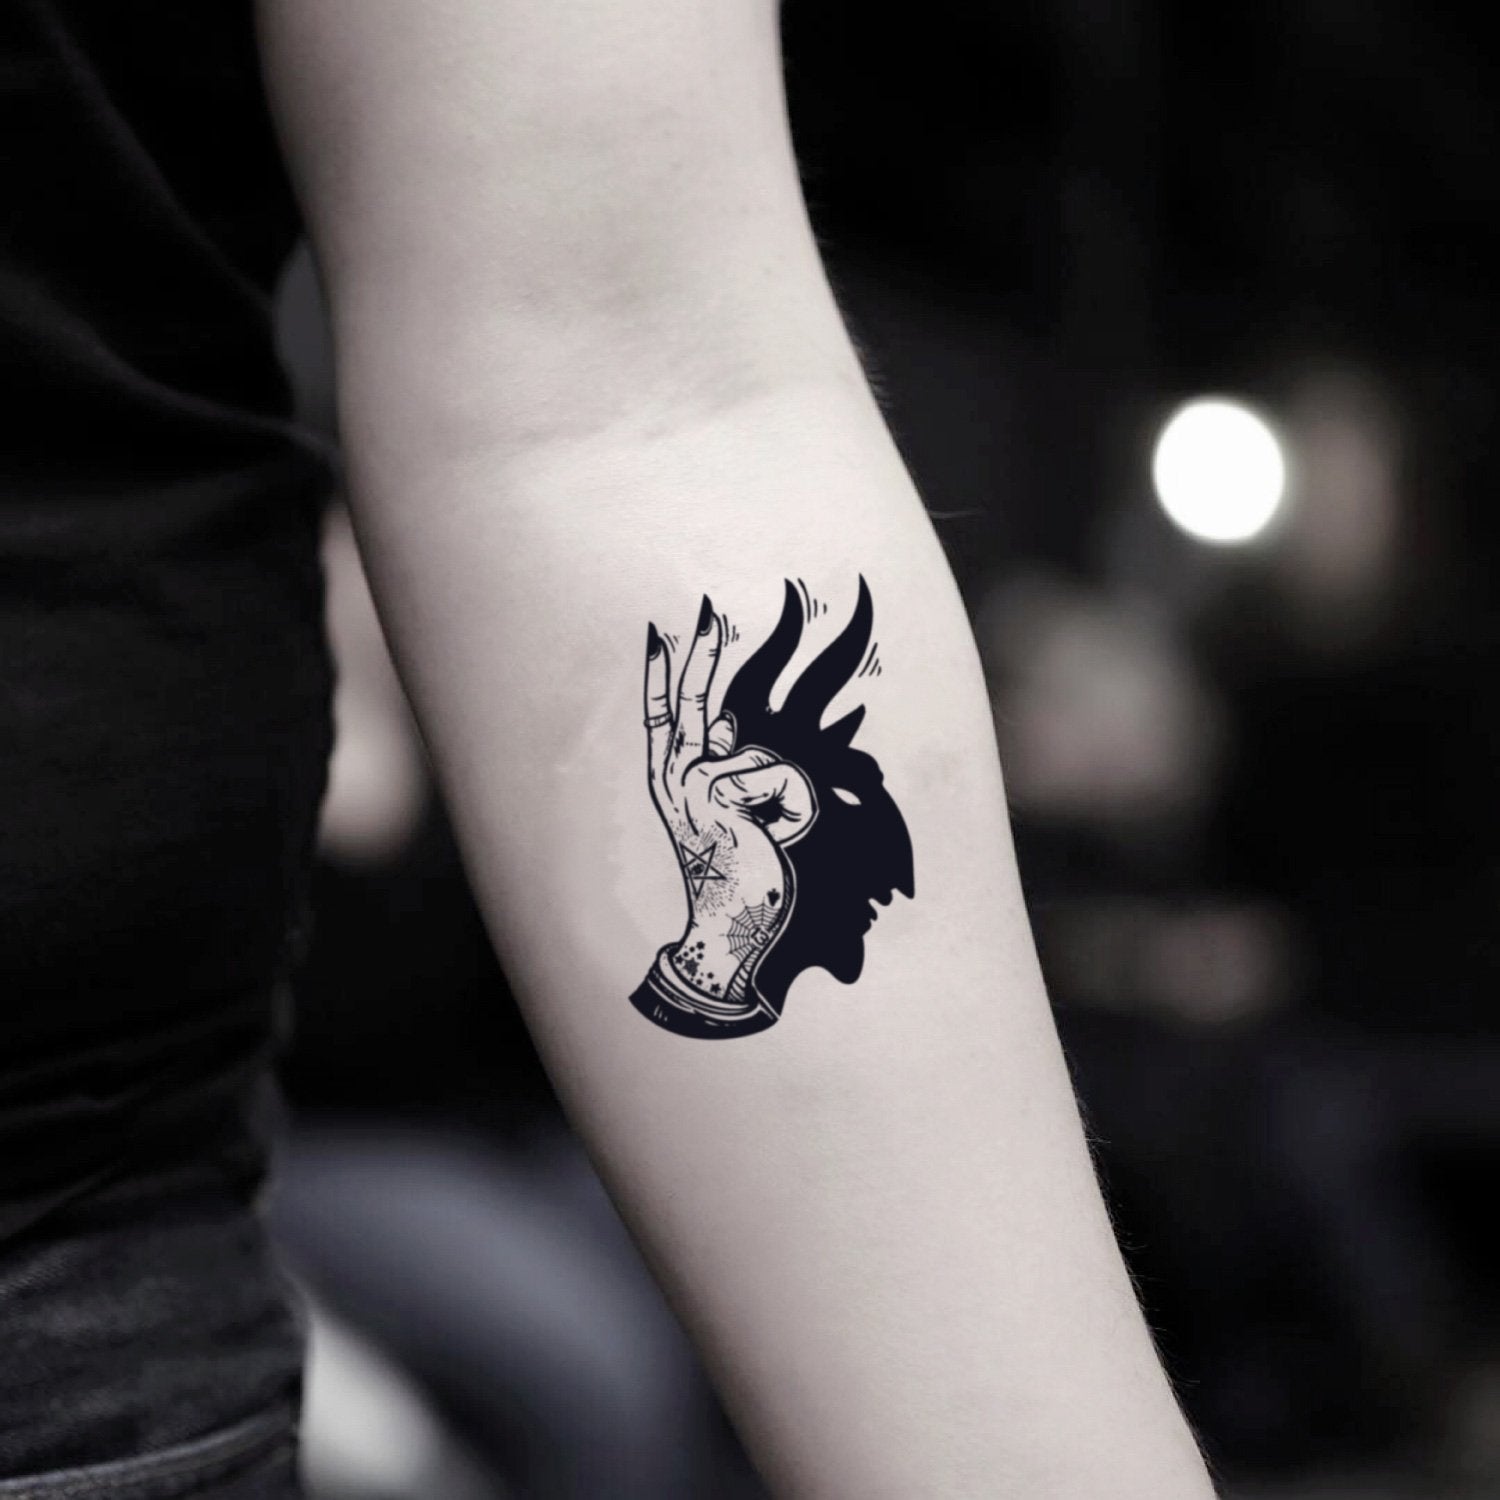 15 Trending Geometric Tattoo Designs to Ink  The Dashing Man